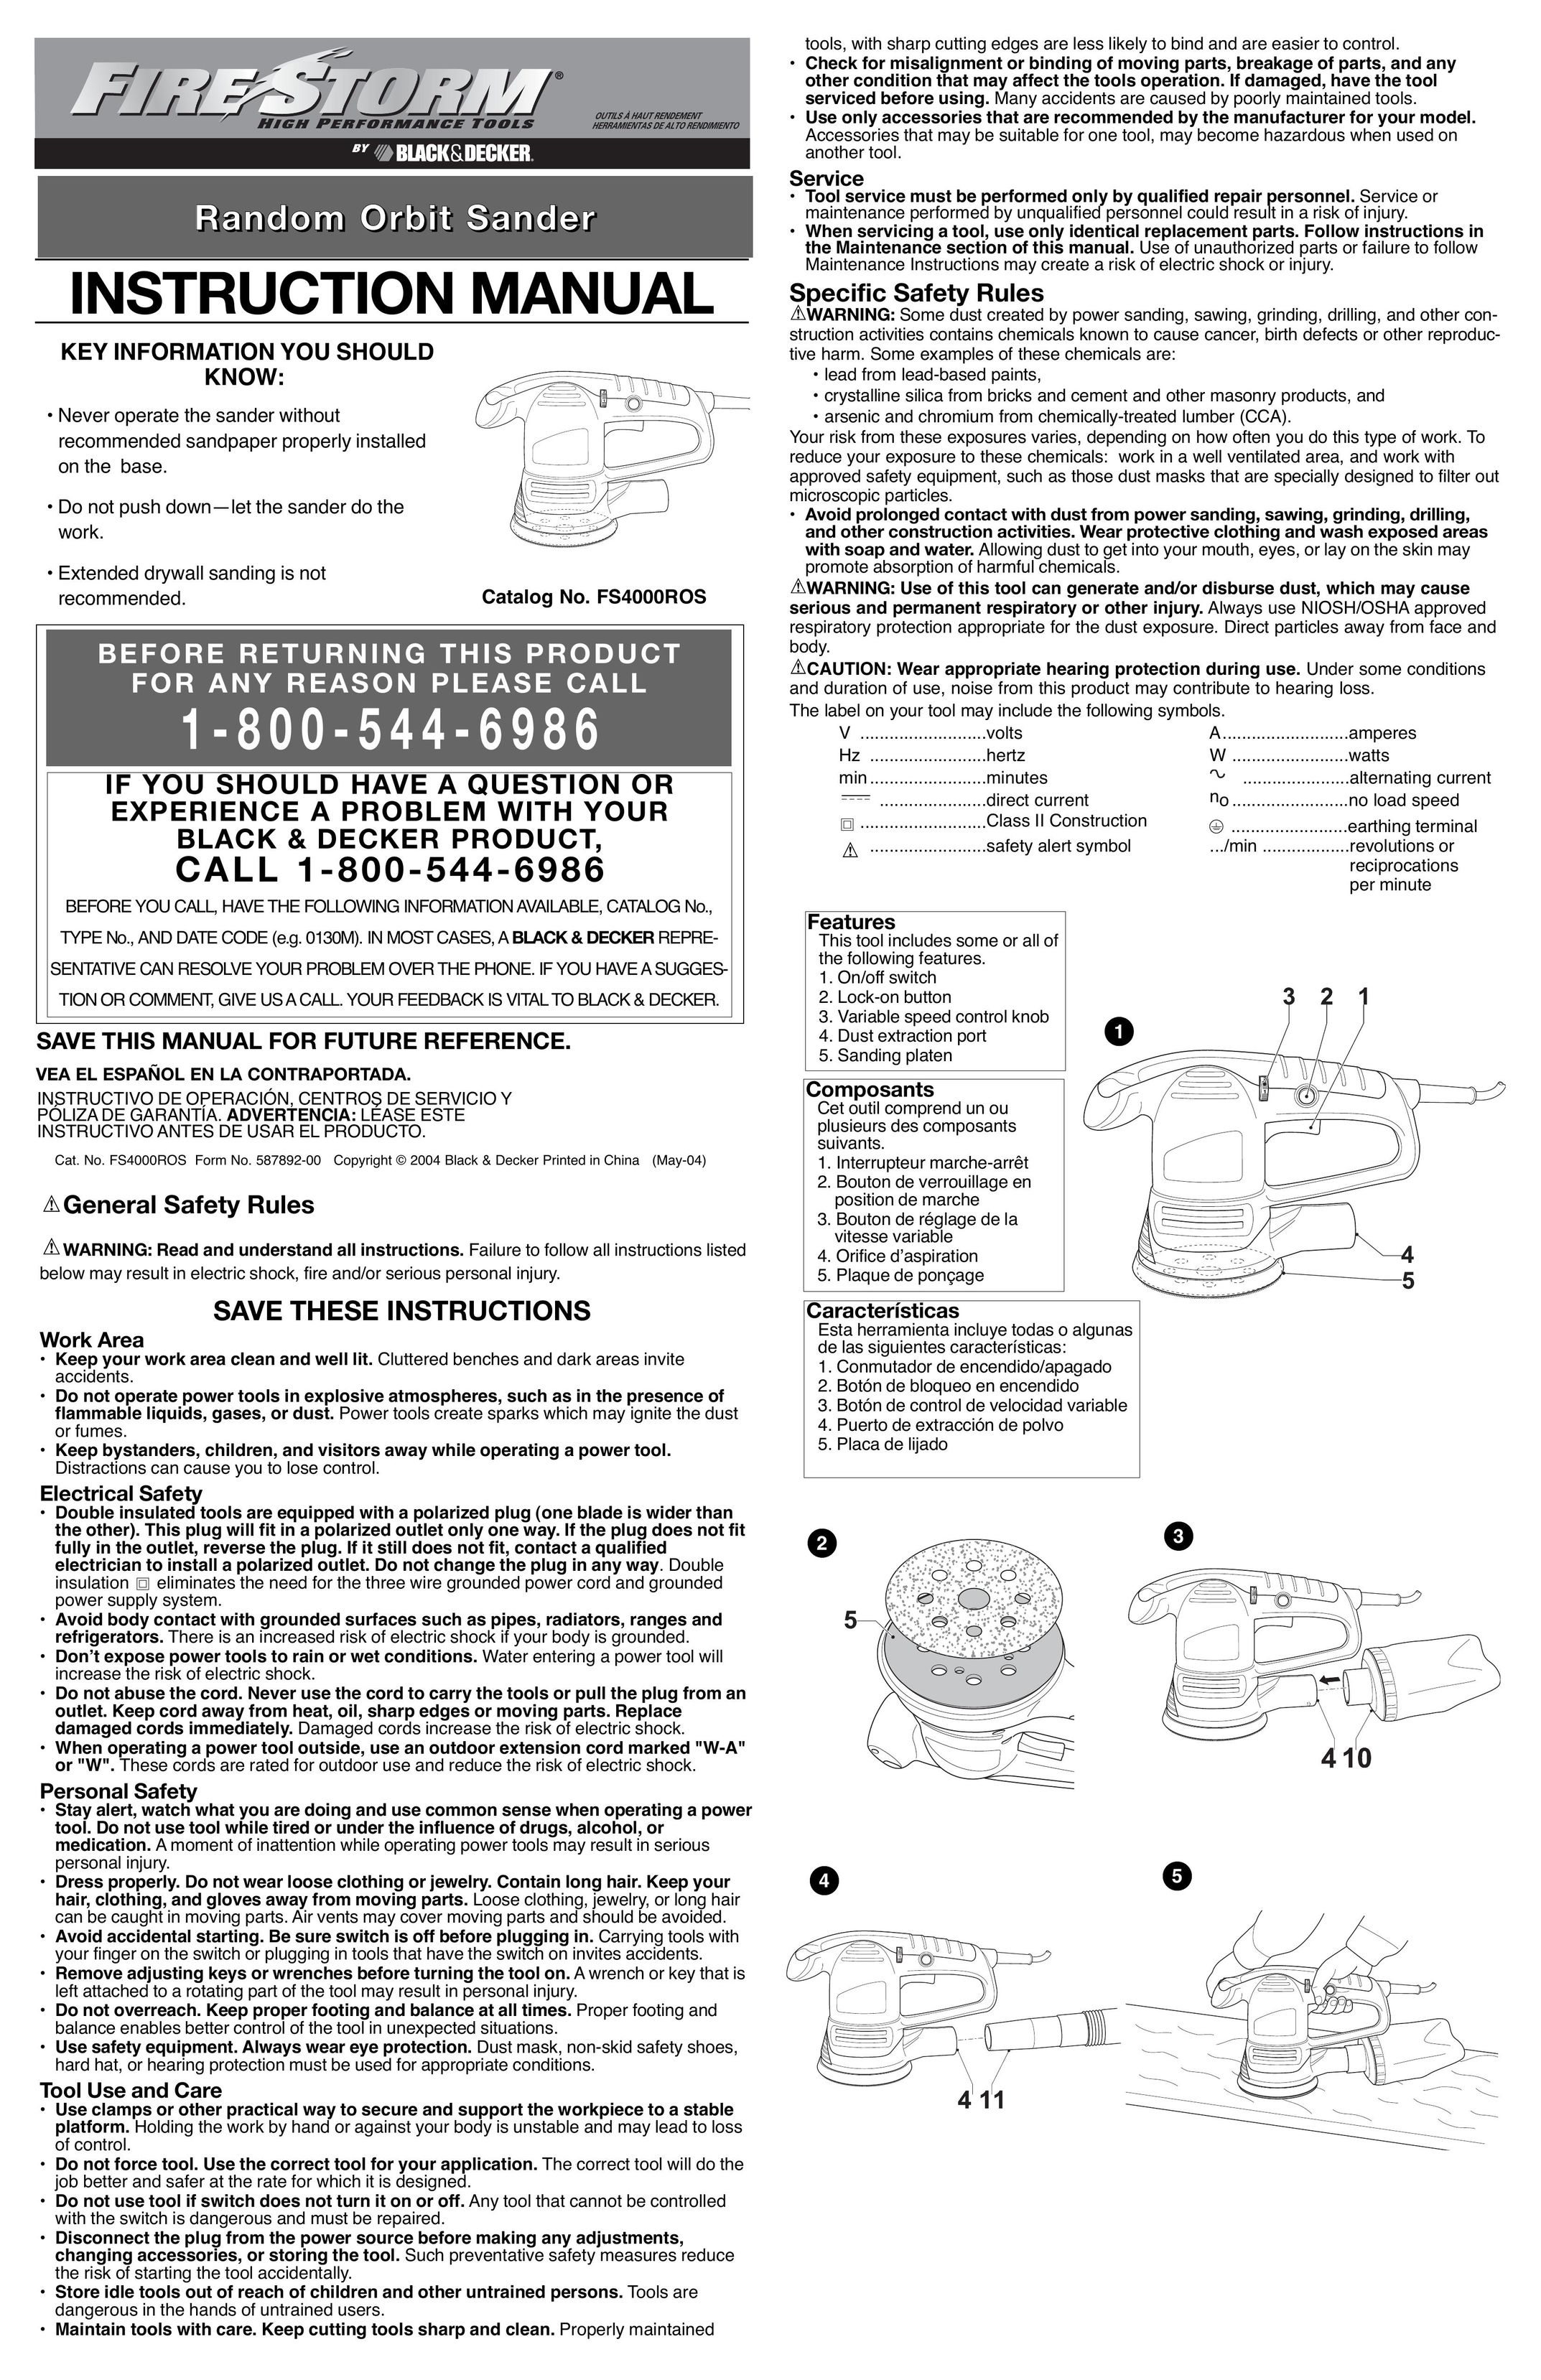 Black & Decker 587892-00 Sander User Manual